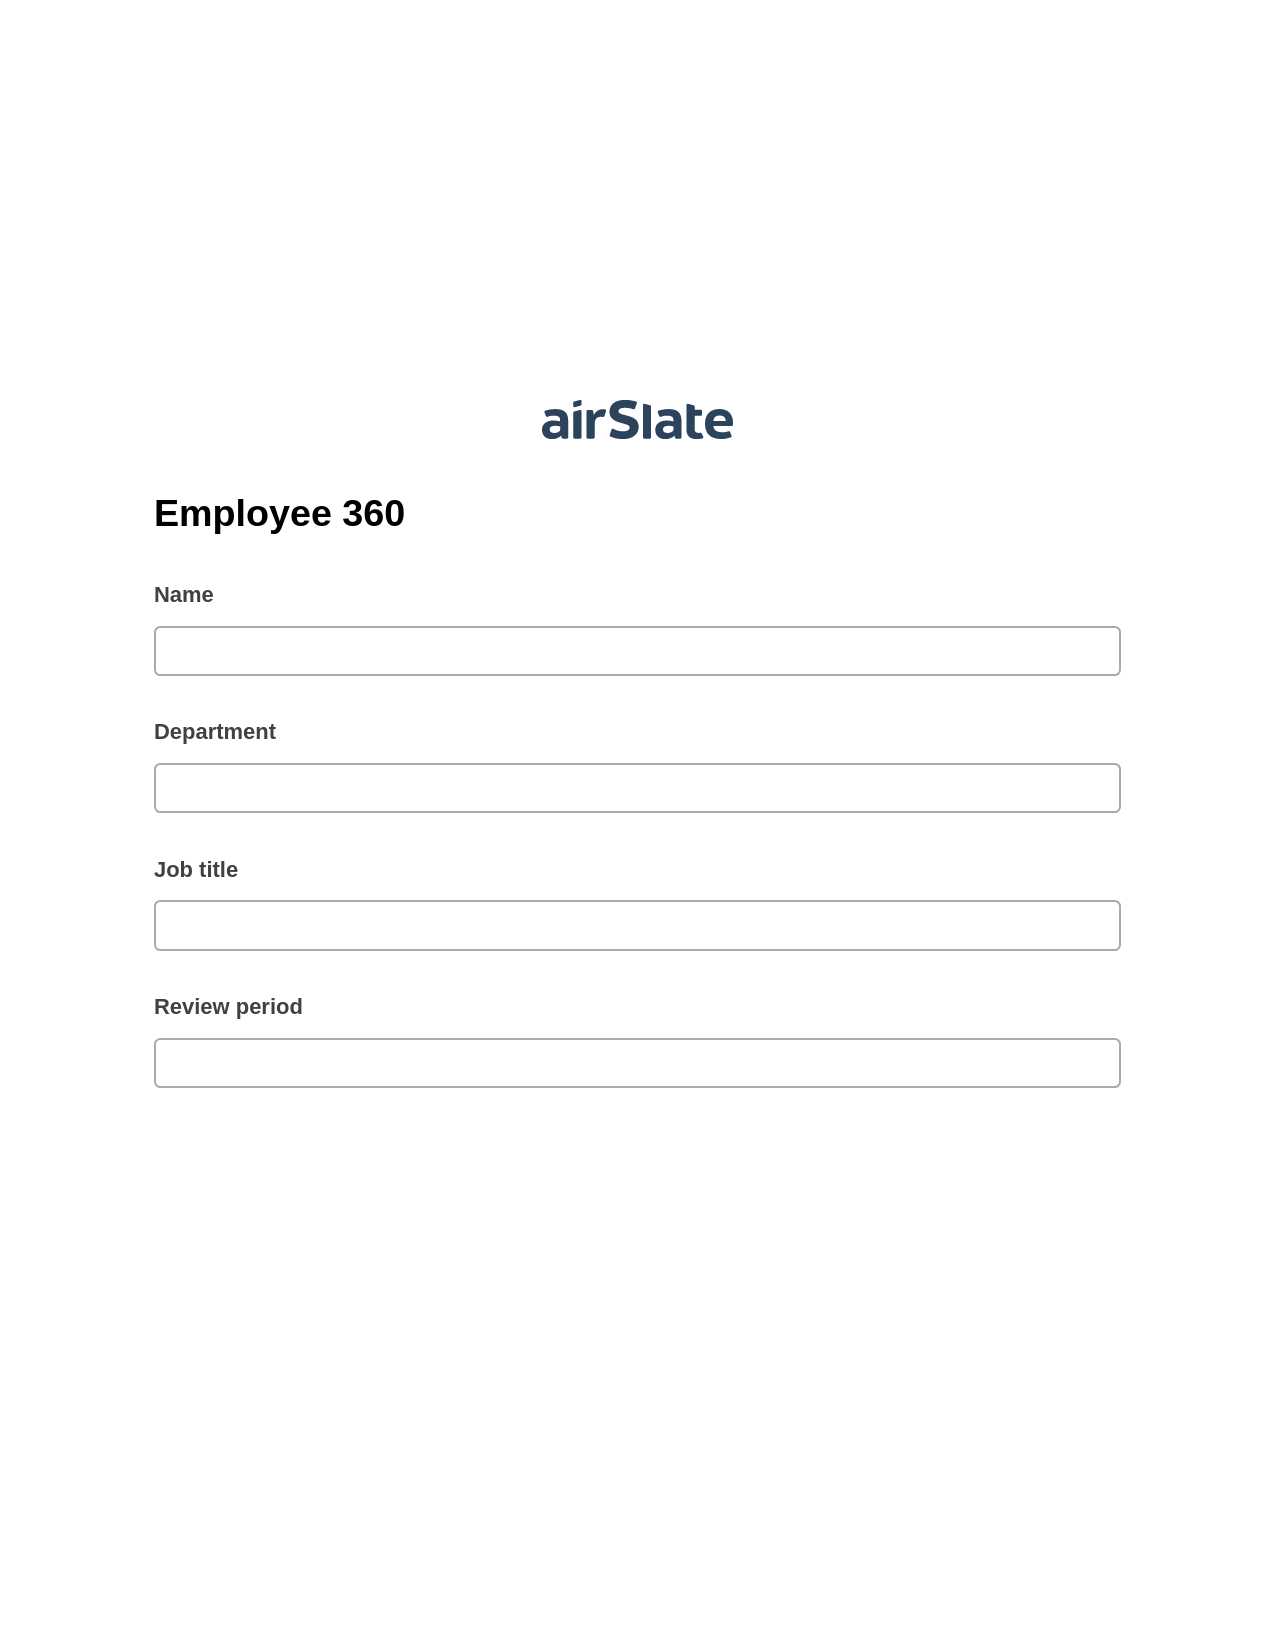 Multirole Employee 360 Pre-fill from MySQL Bot, Create QuickBooks Invoice Bot, Export to Smartsheet